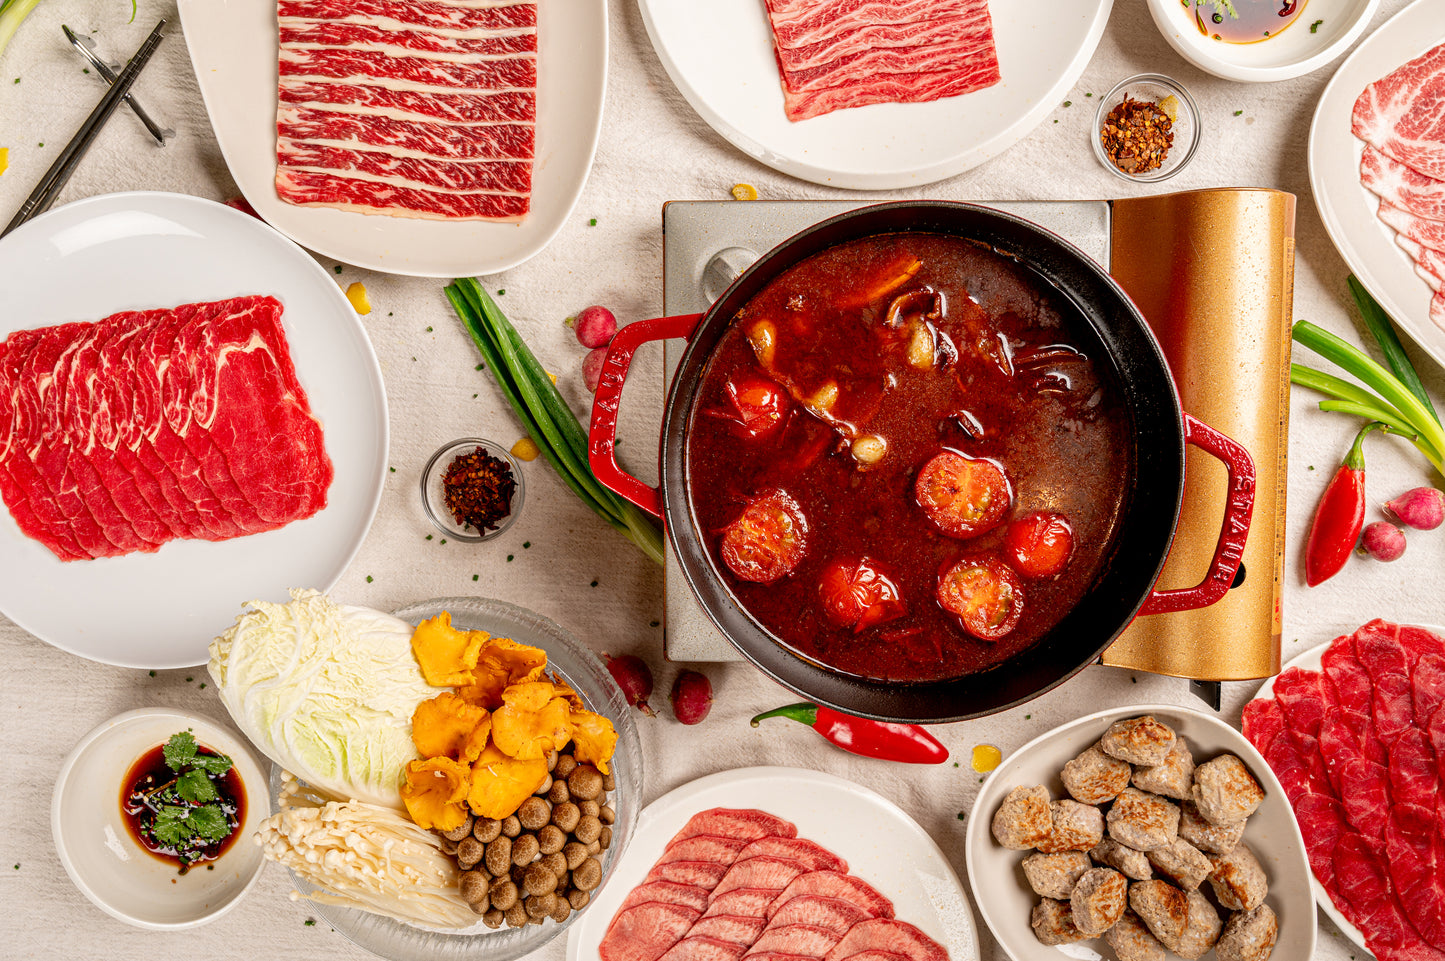 Guizhou-Style Sour Beef Hotpot 貴州酸湯牛肉火鍋食材包